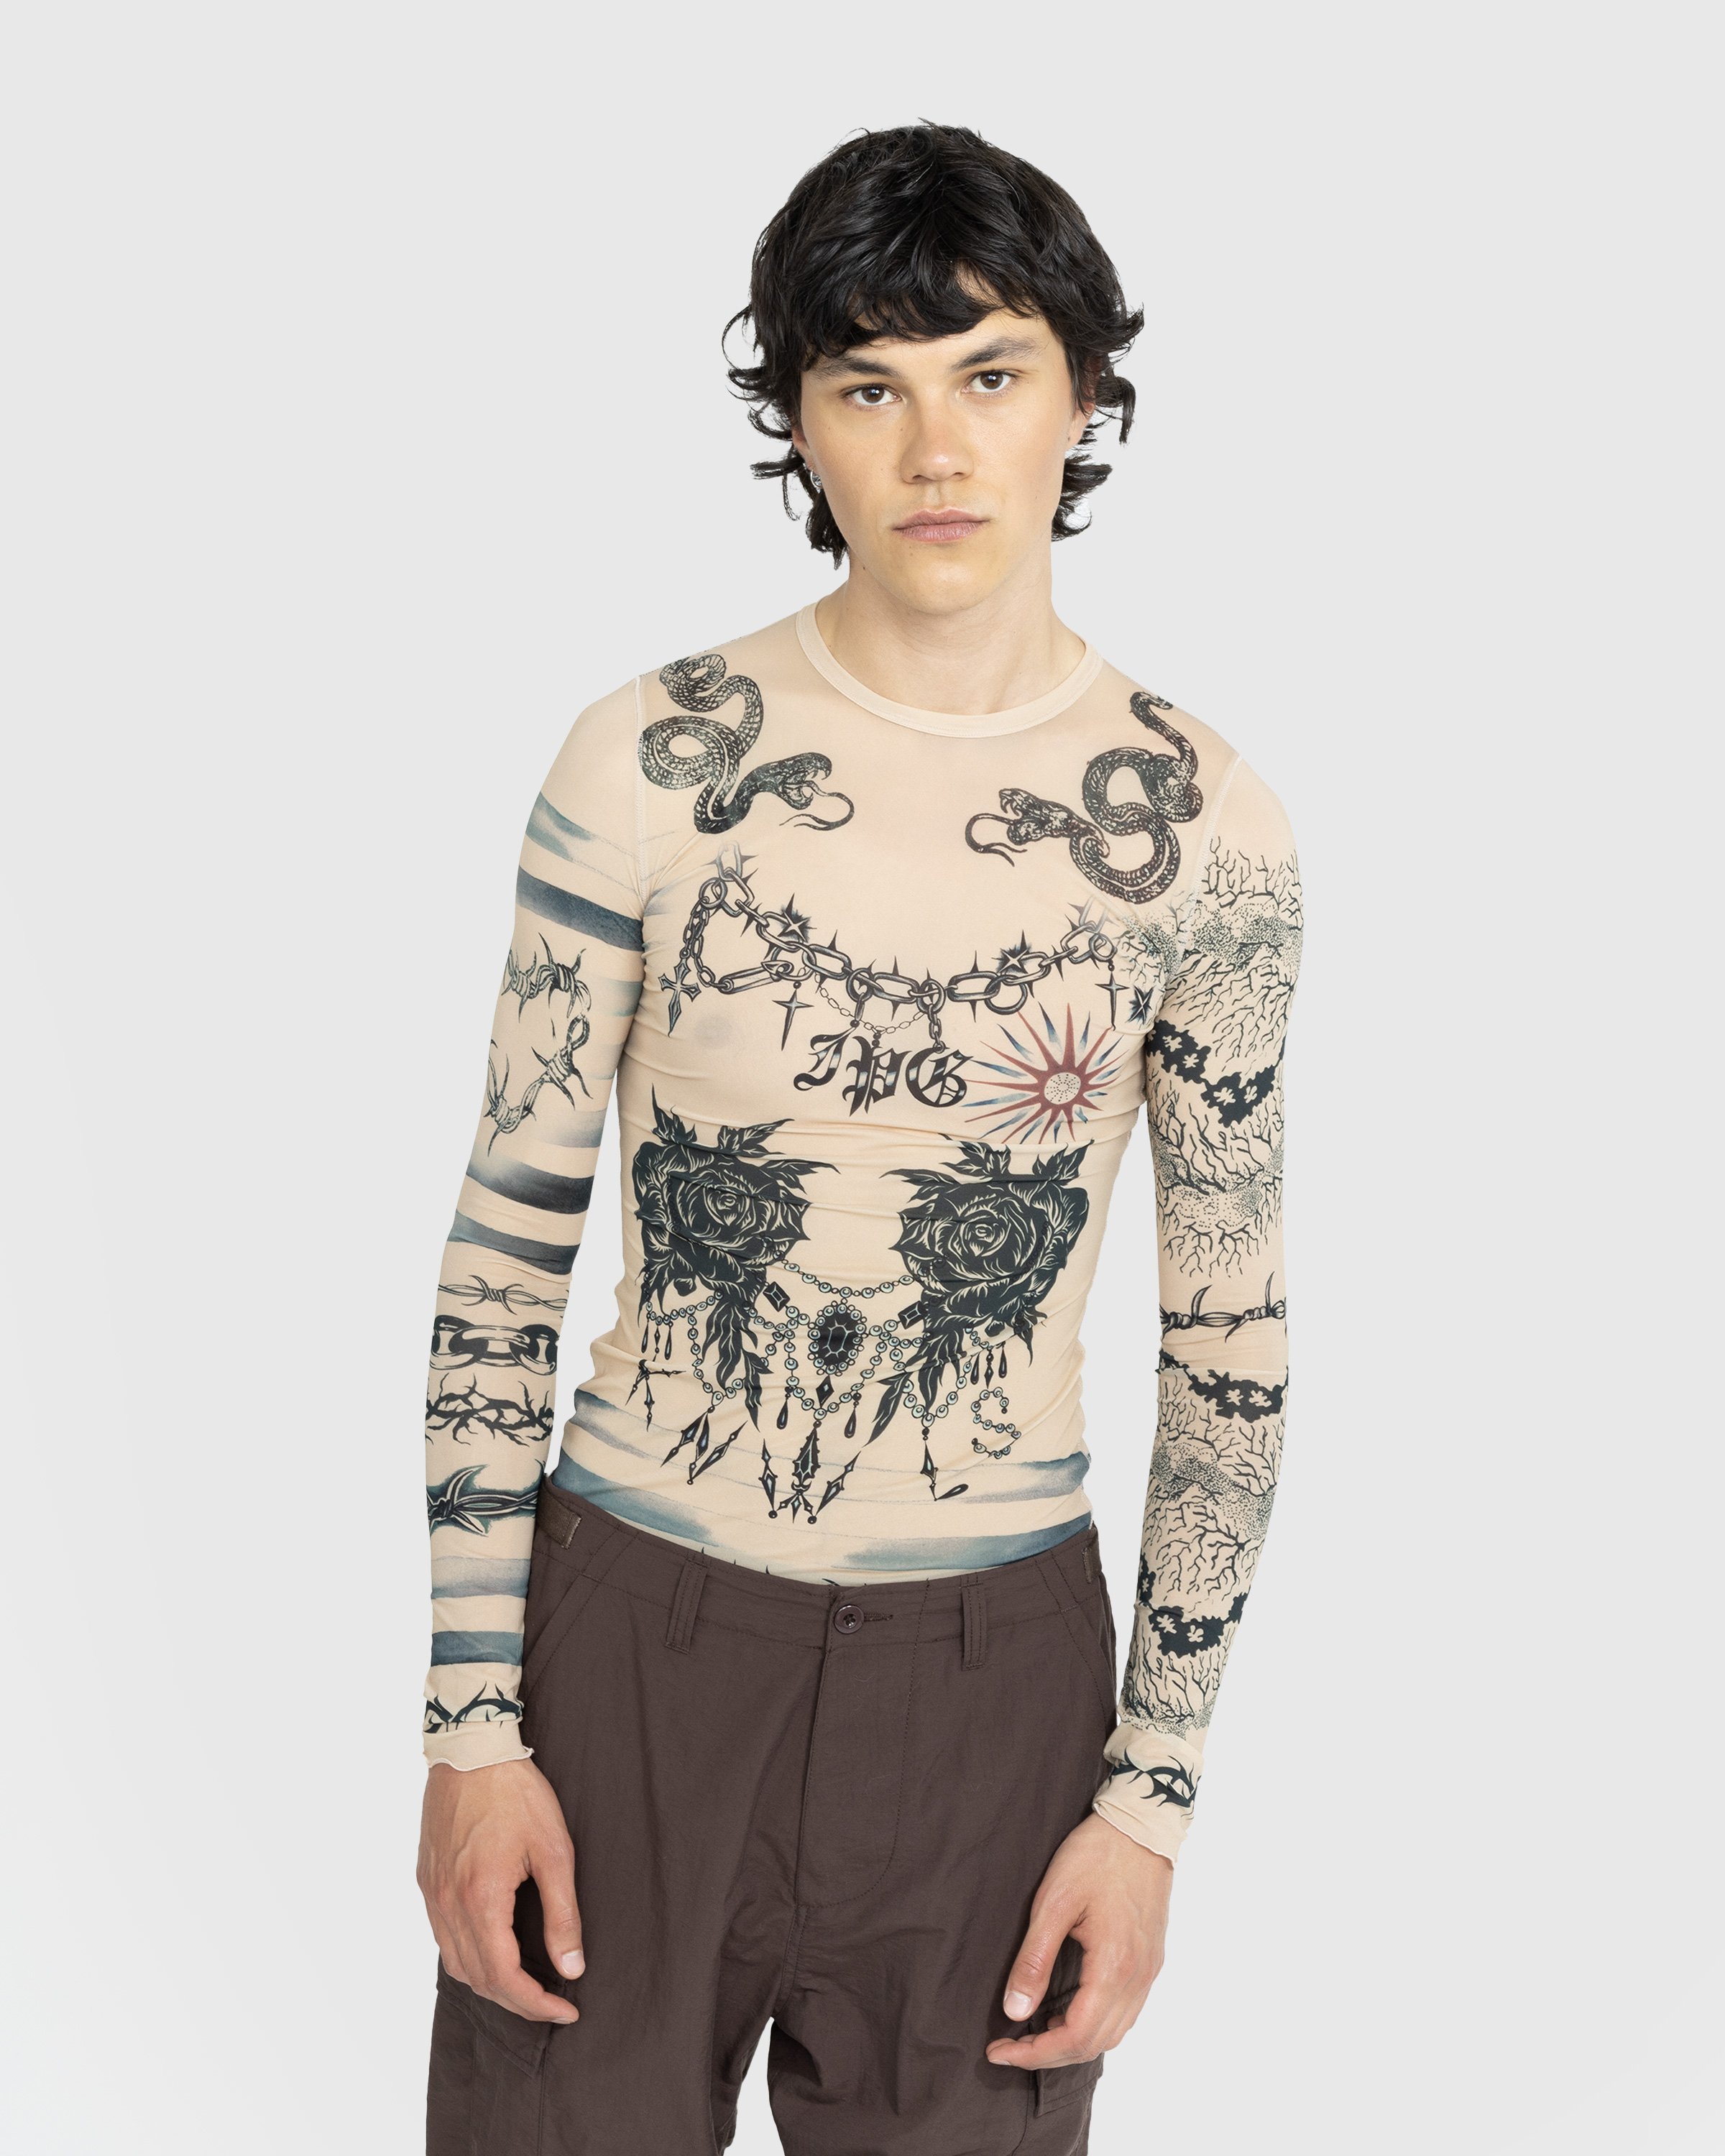 Jean Paul Gaultier - Trompe l'oeil Tattoo Longsleeve Top Nude/Grey/Black - Clothing - Beige - Image 2